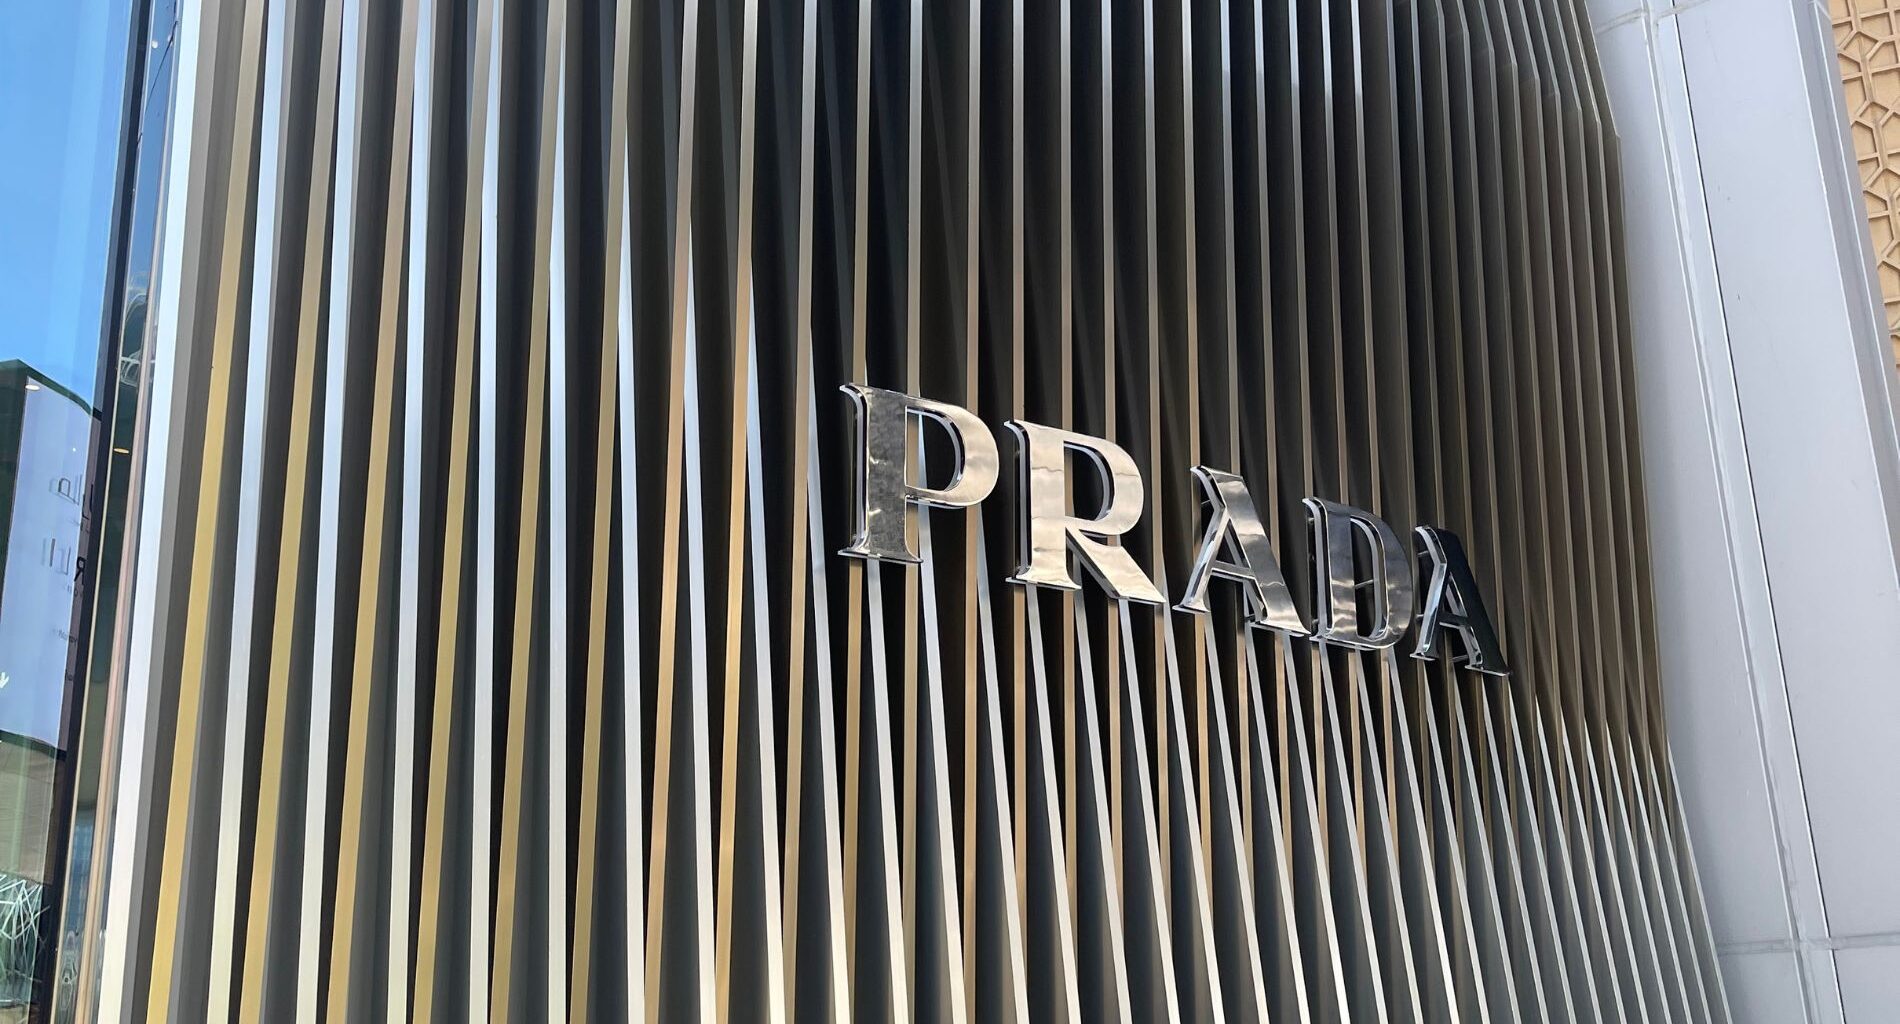 The History of Prada